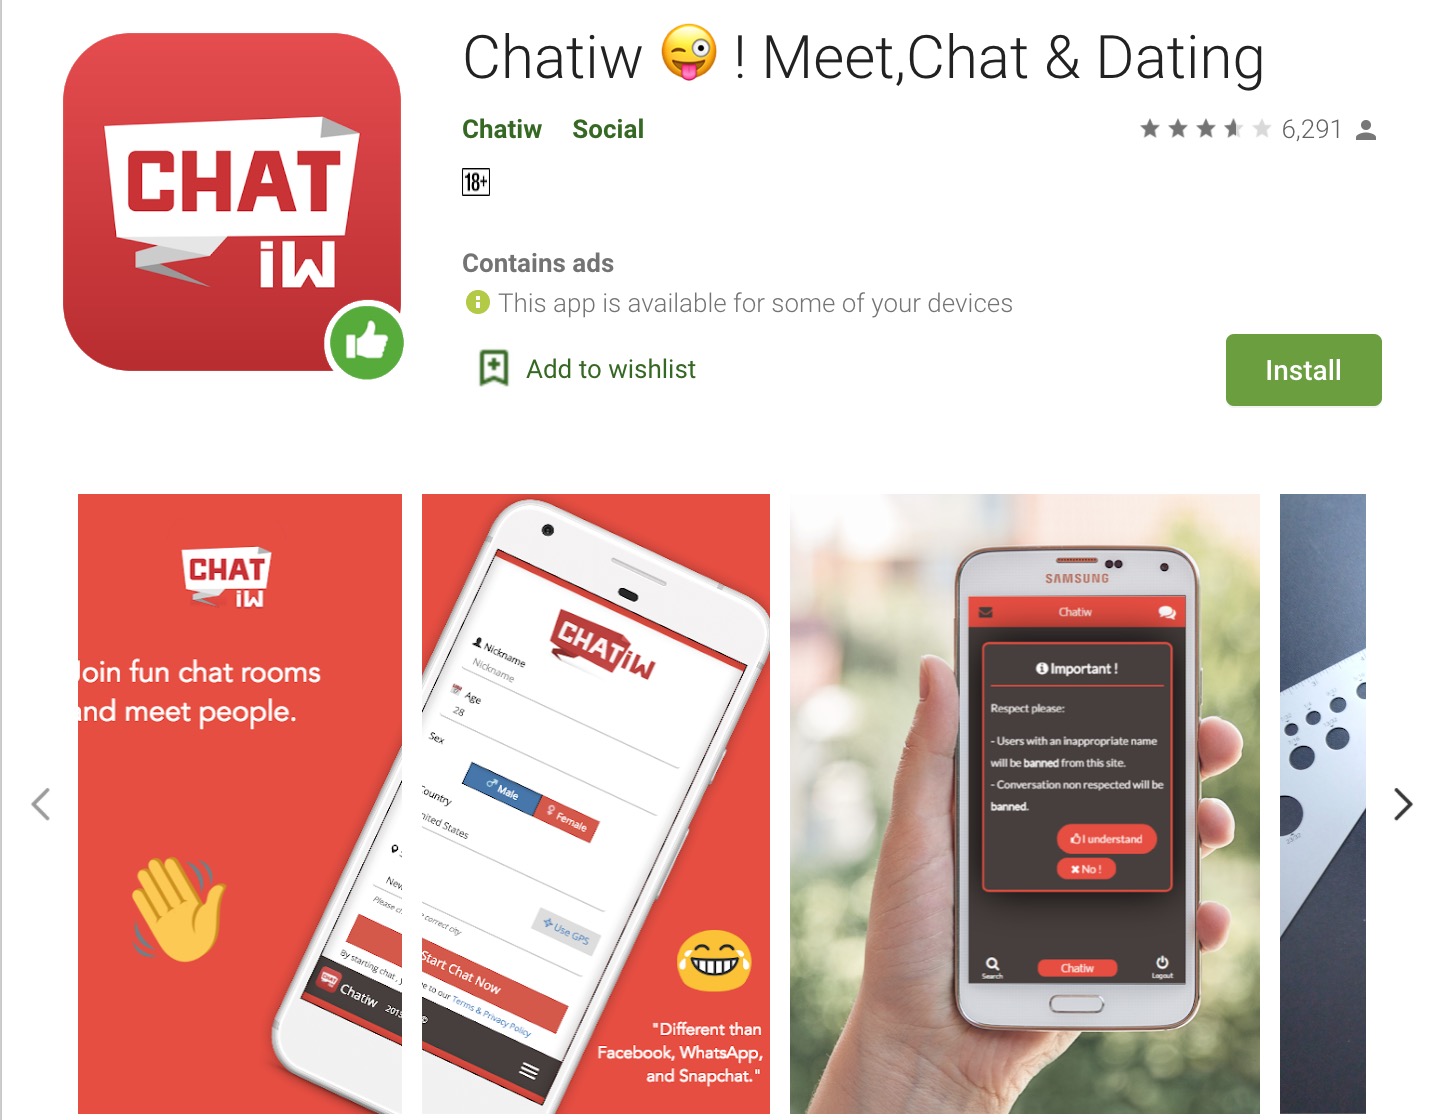 Chatiw.us app